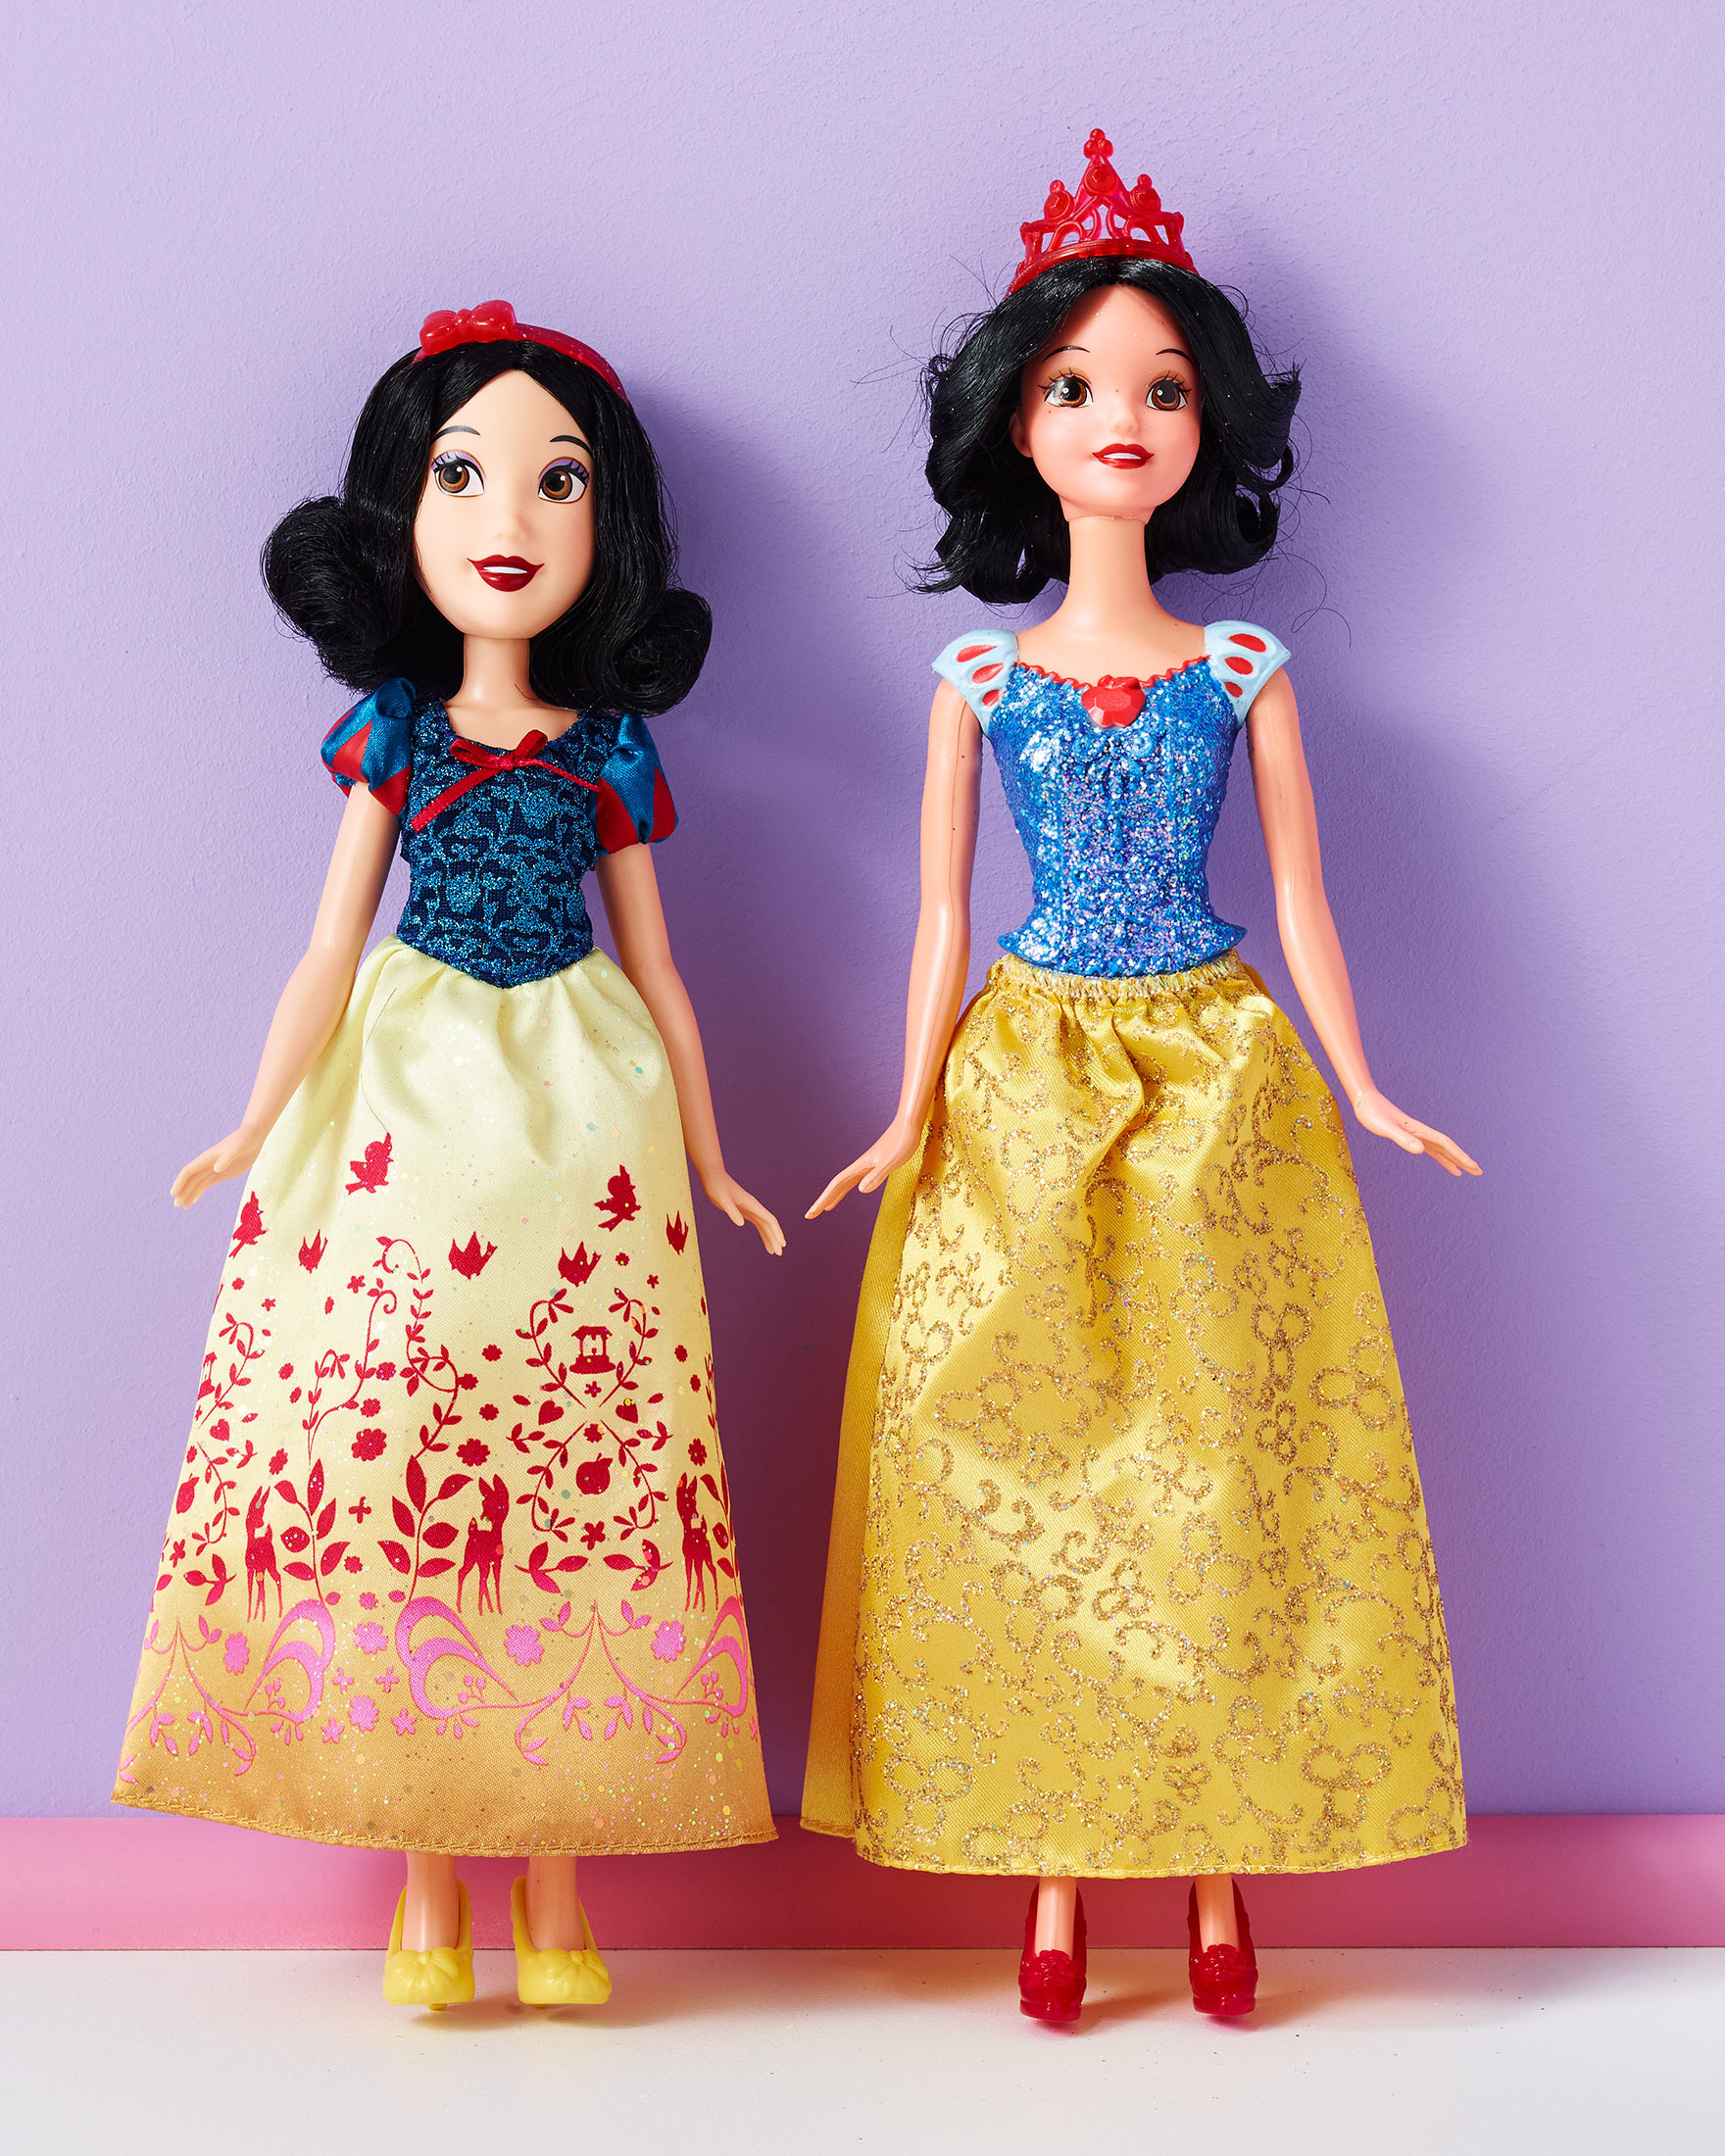 hasbro disney princess dolls review